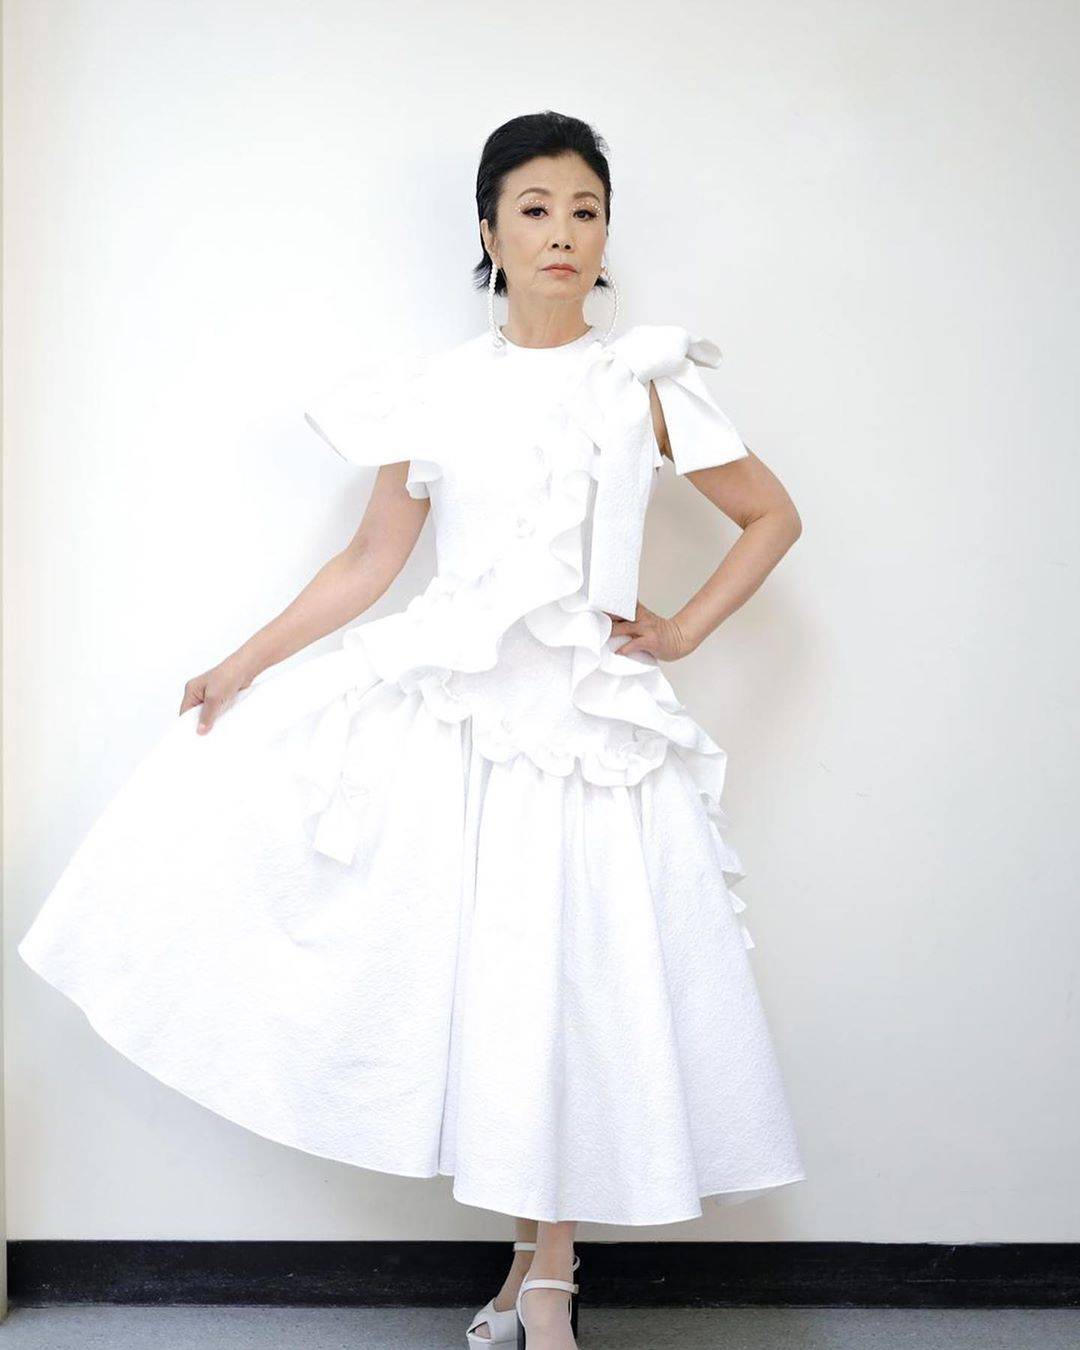 穿上全白 SHUSHU/TONG 晚裝的汪明荃格外有氣質。（Instagram @wang_liza）